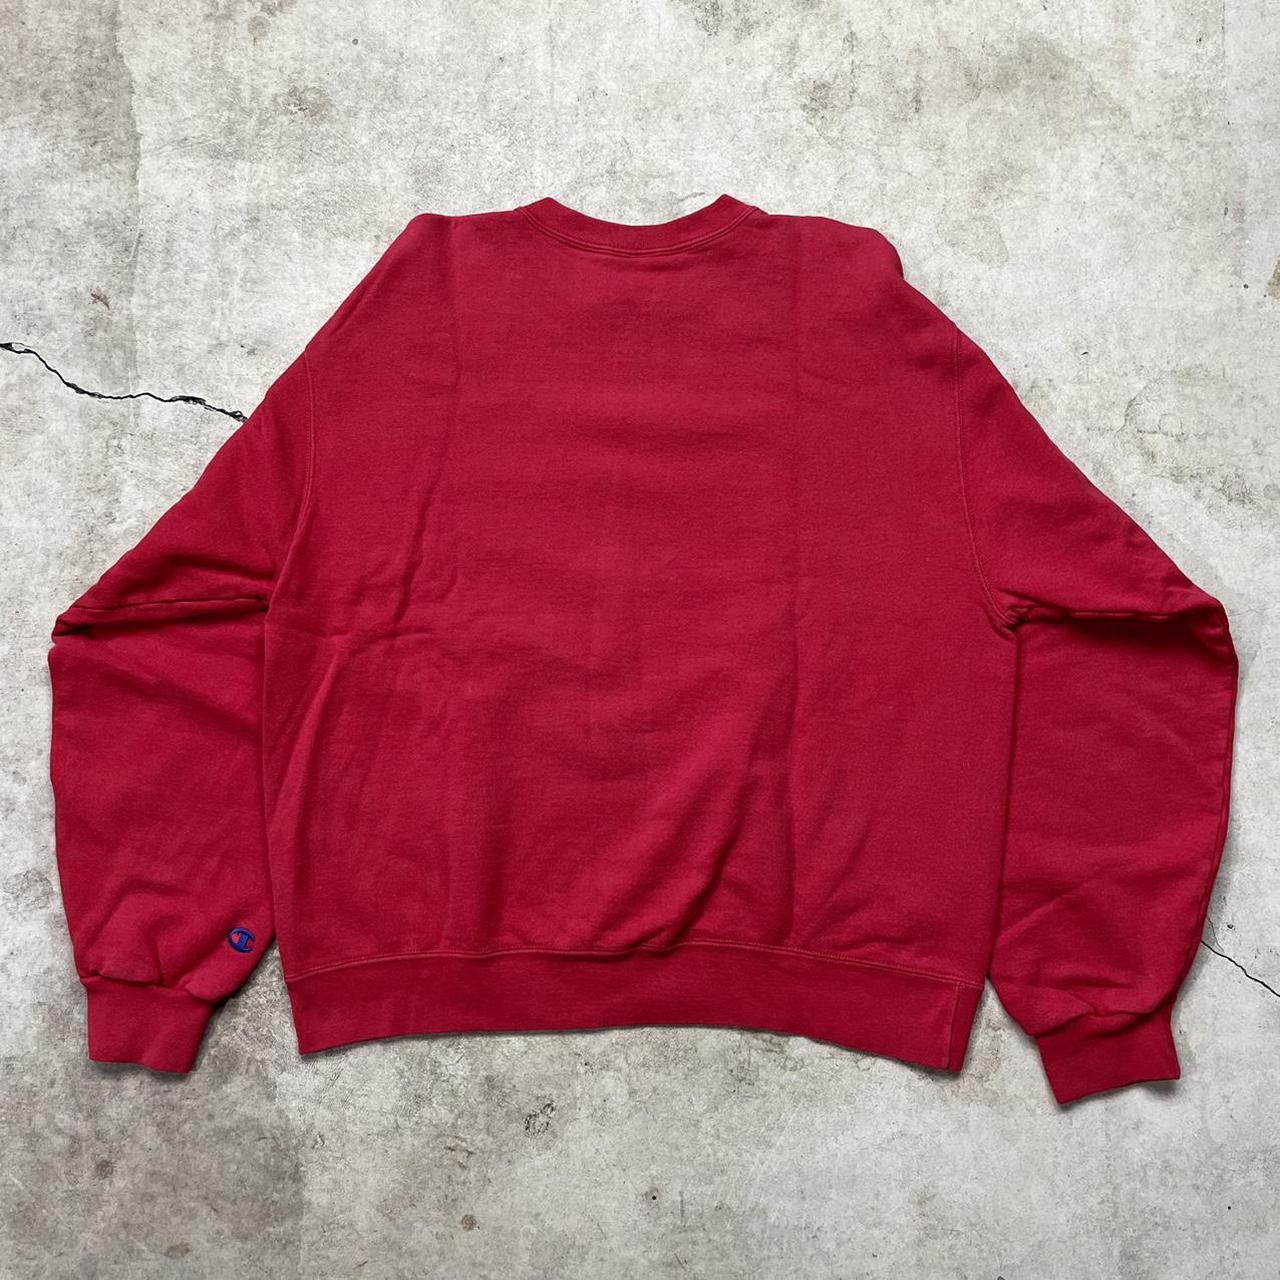 Product Image 2 - Vintage 90s Champion Crewneck Sweatshirt
Size